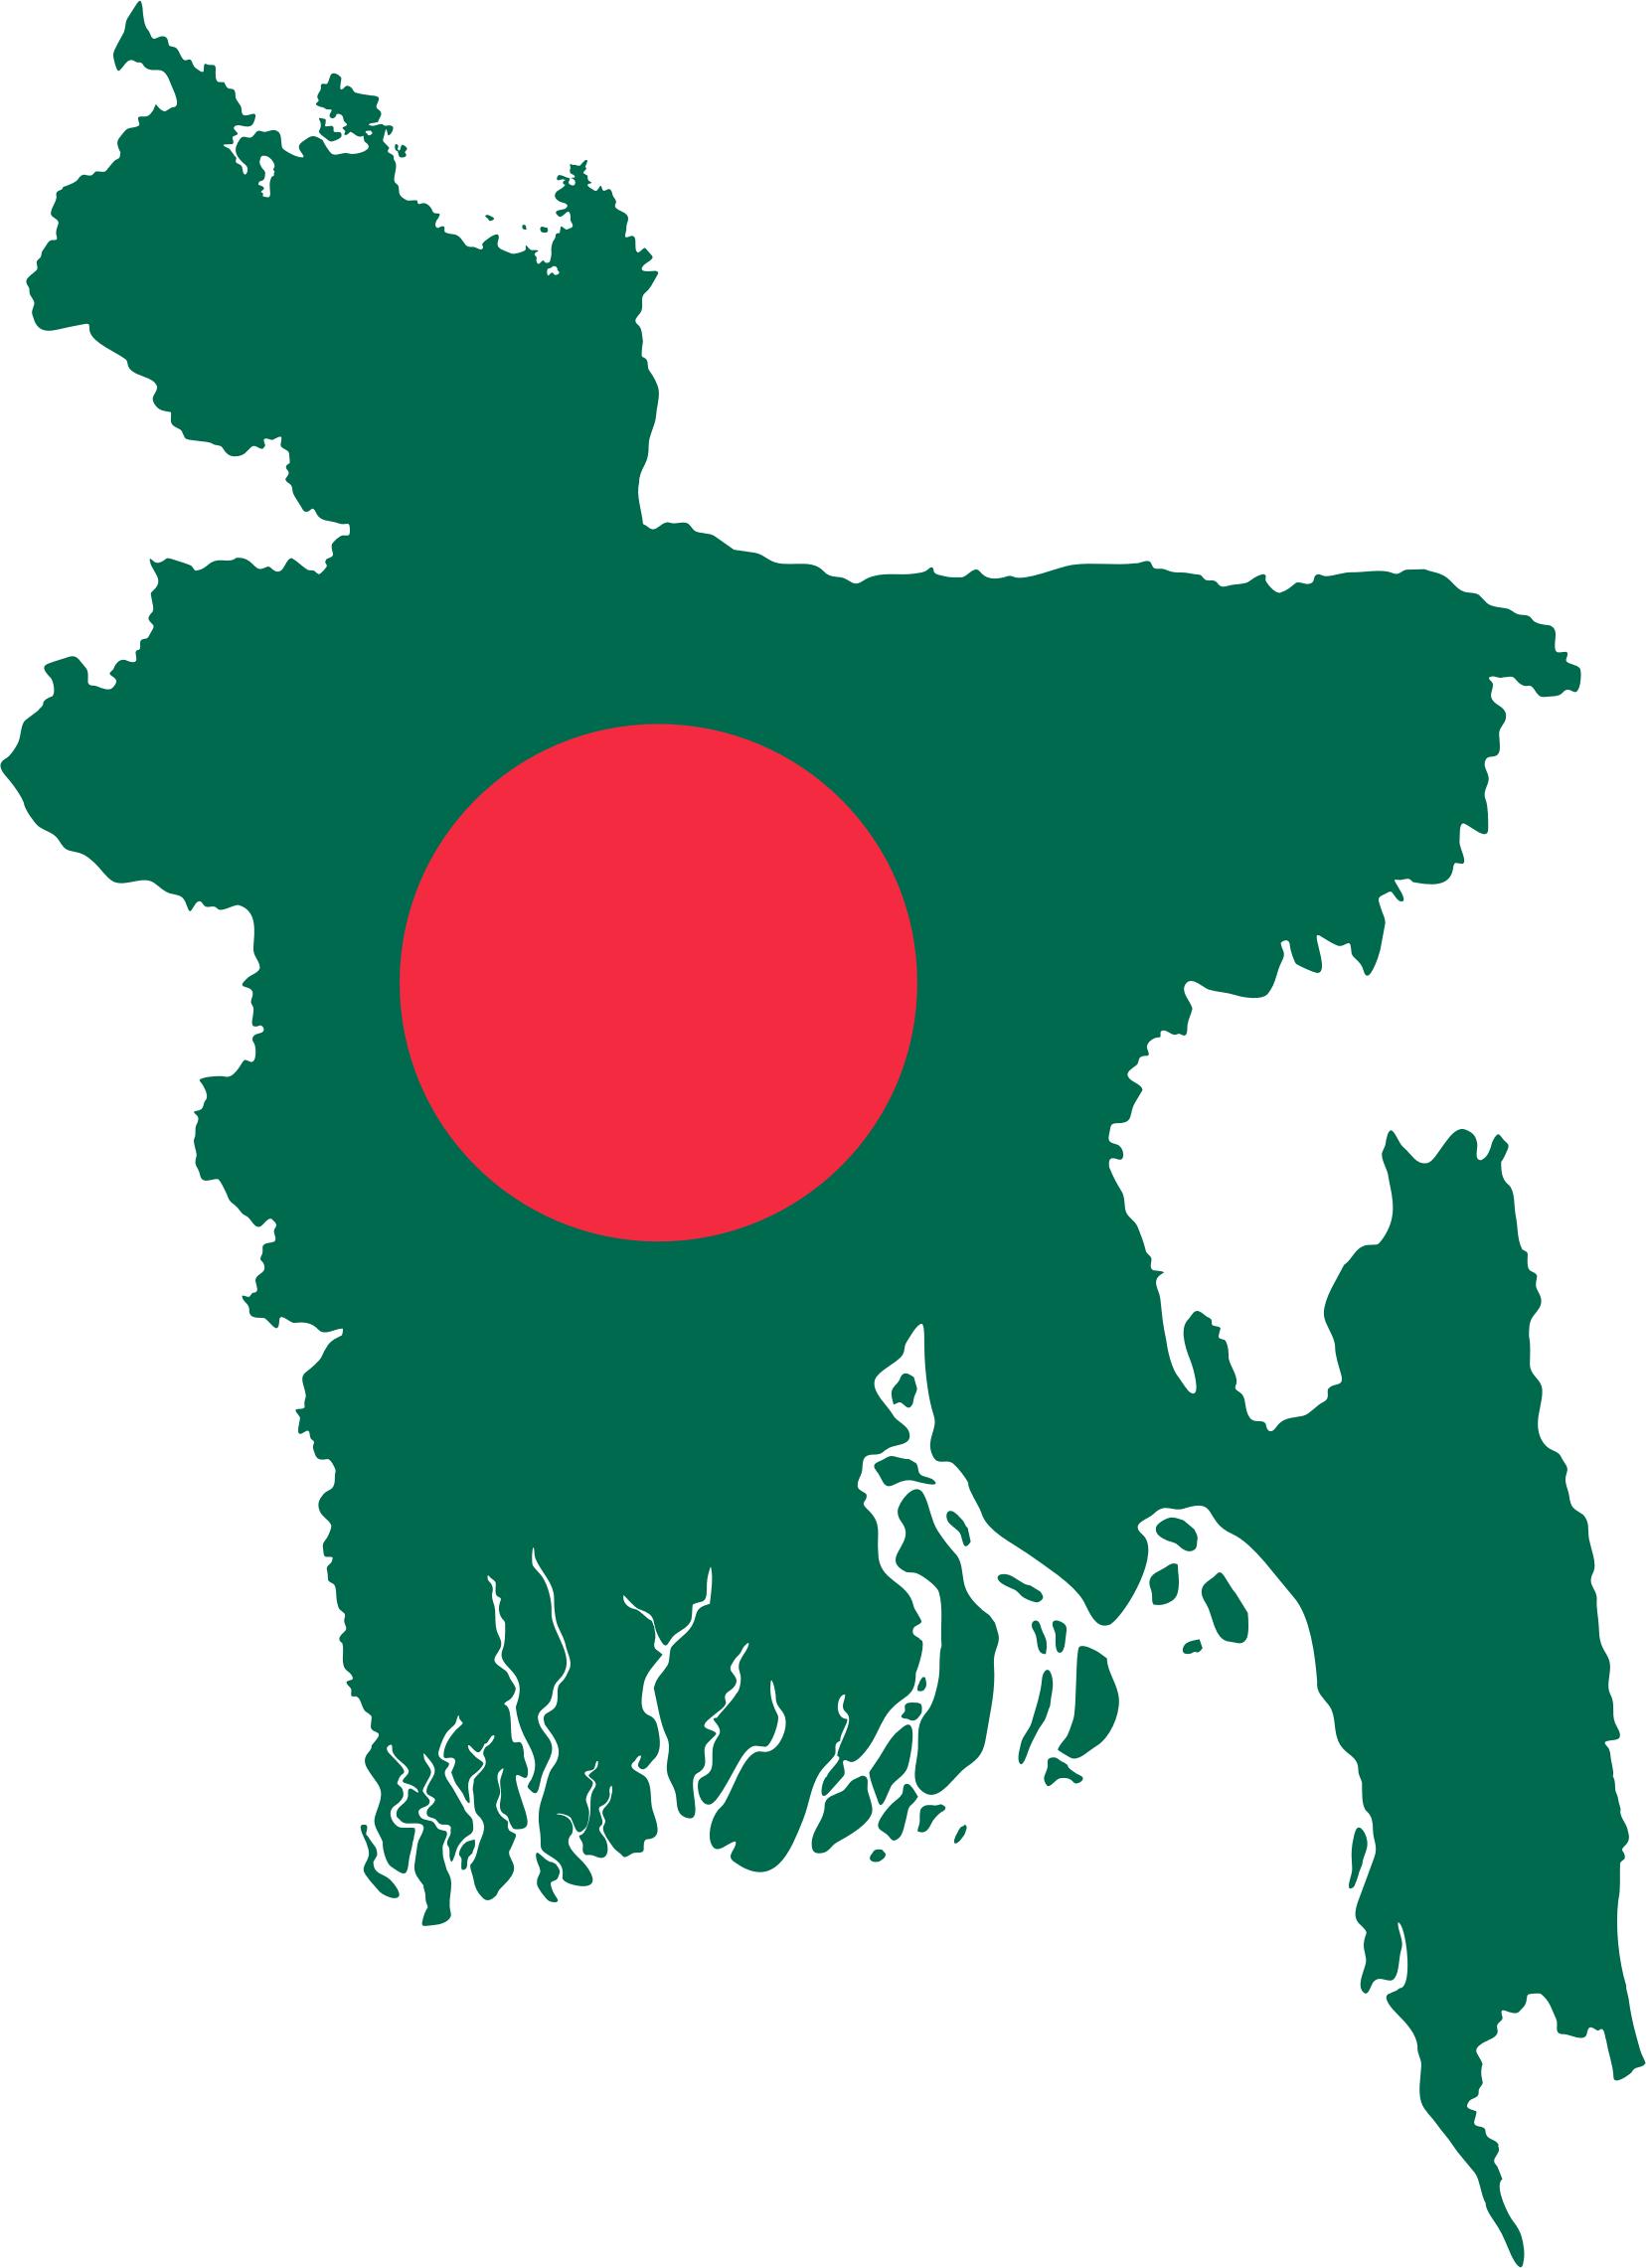 Bangladesh Map image